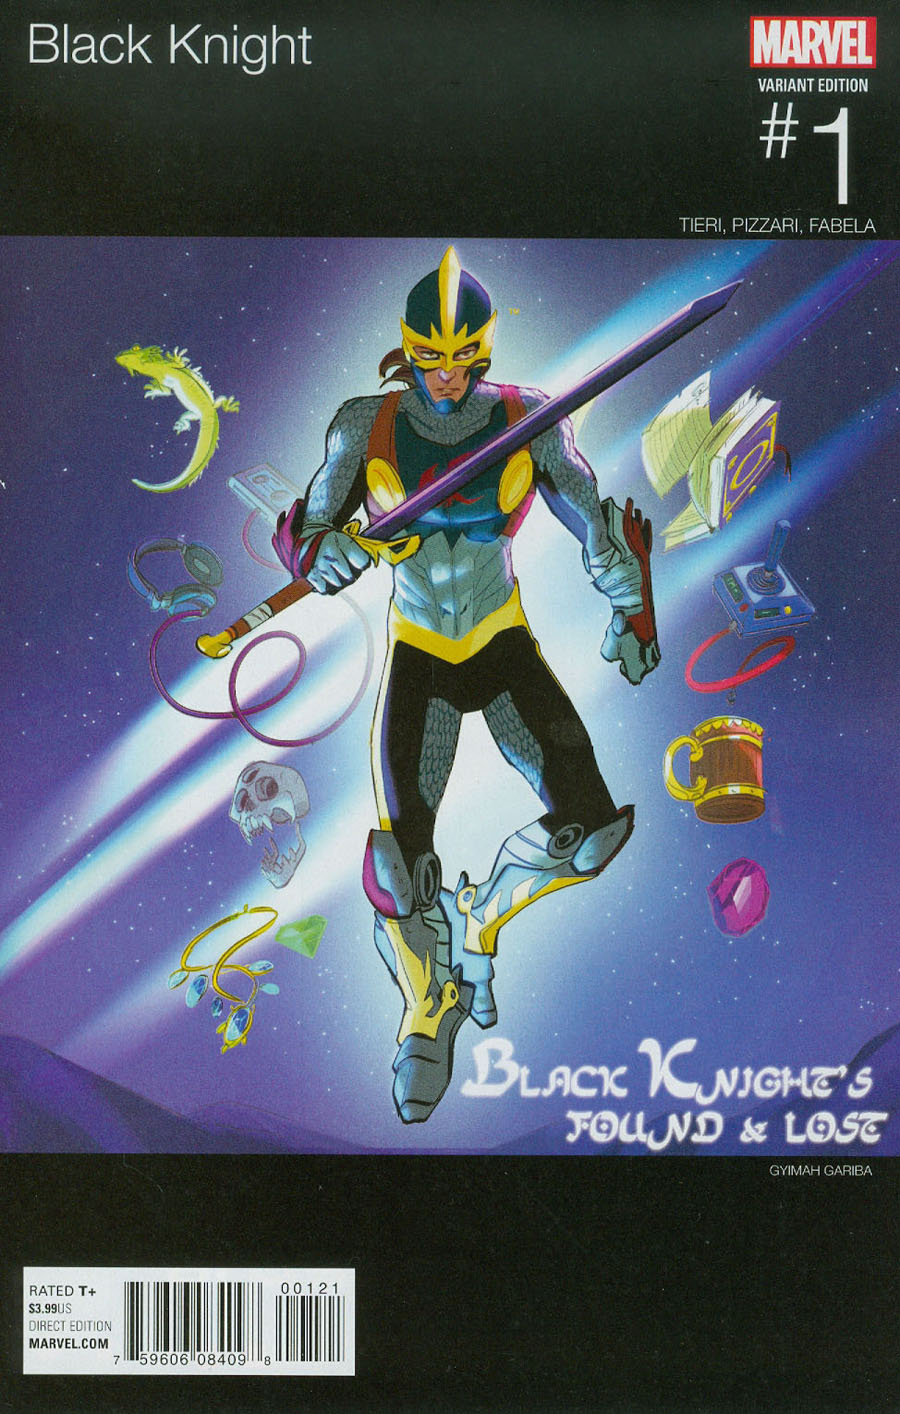 Black Knight Vol 4 #1 Cover B Variant Marvel Hip-Hop Cover